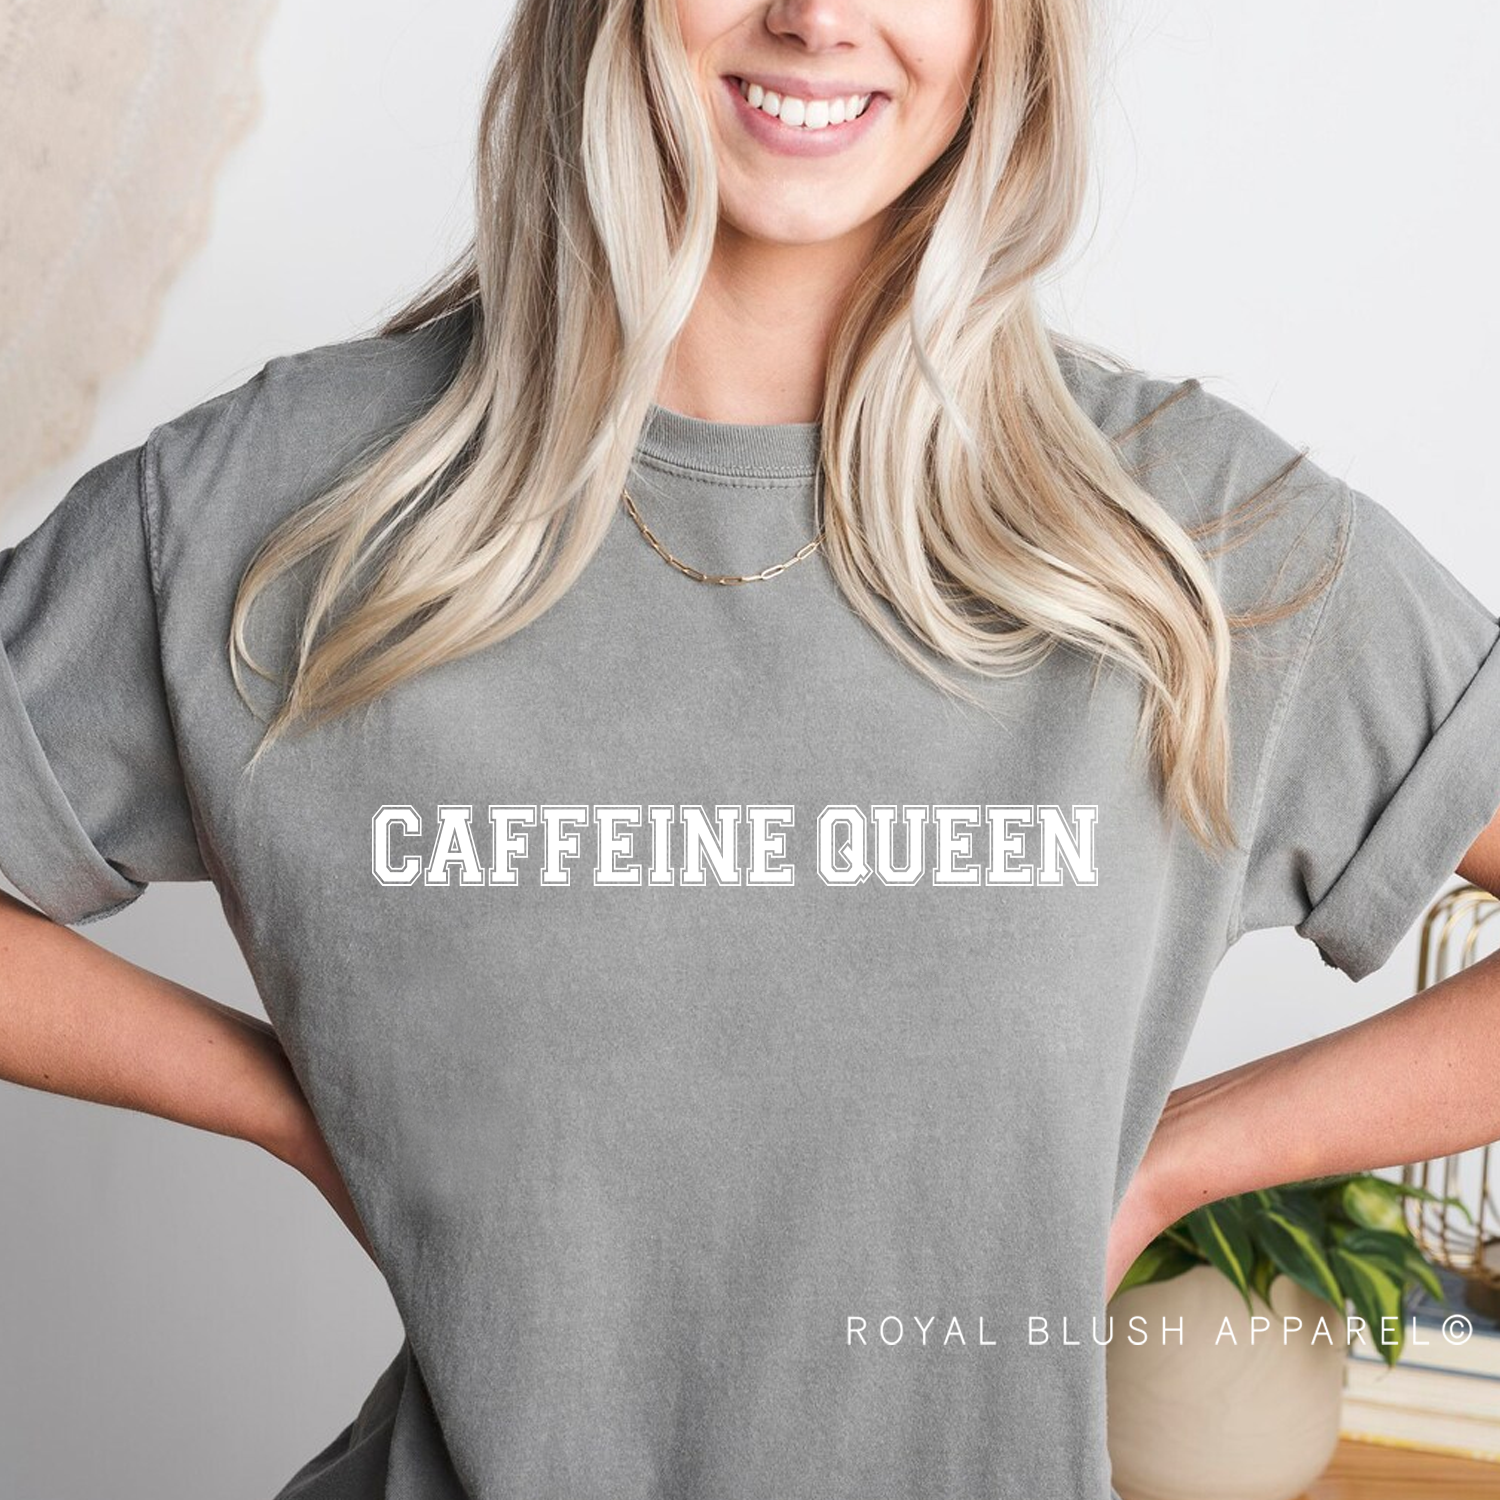 Transfert de sérigraphie Caffeine Queen